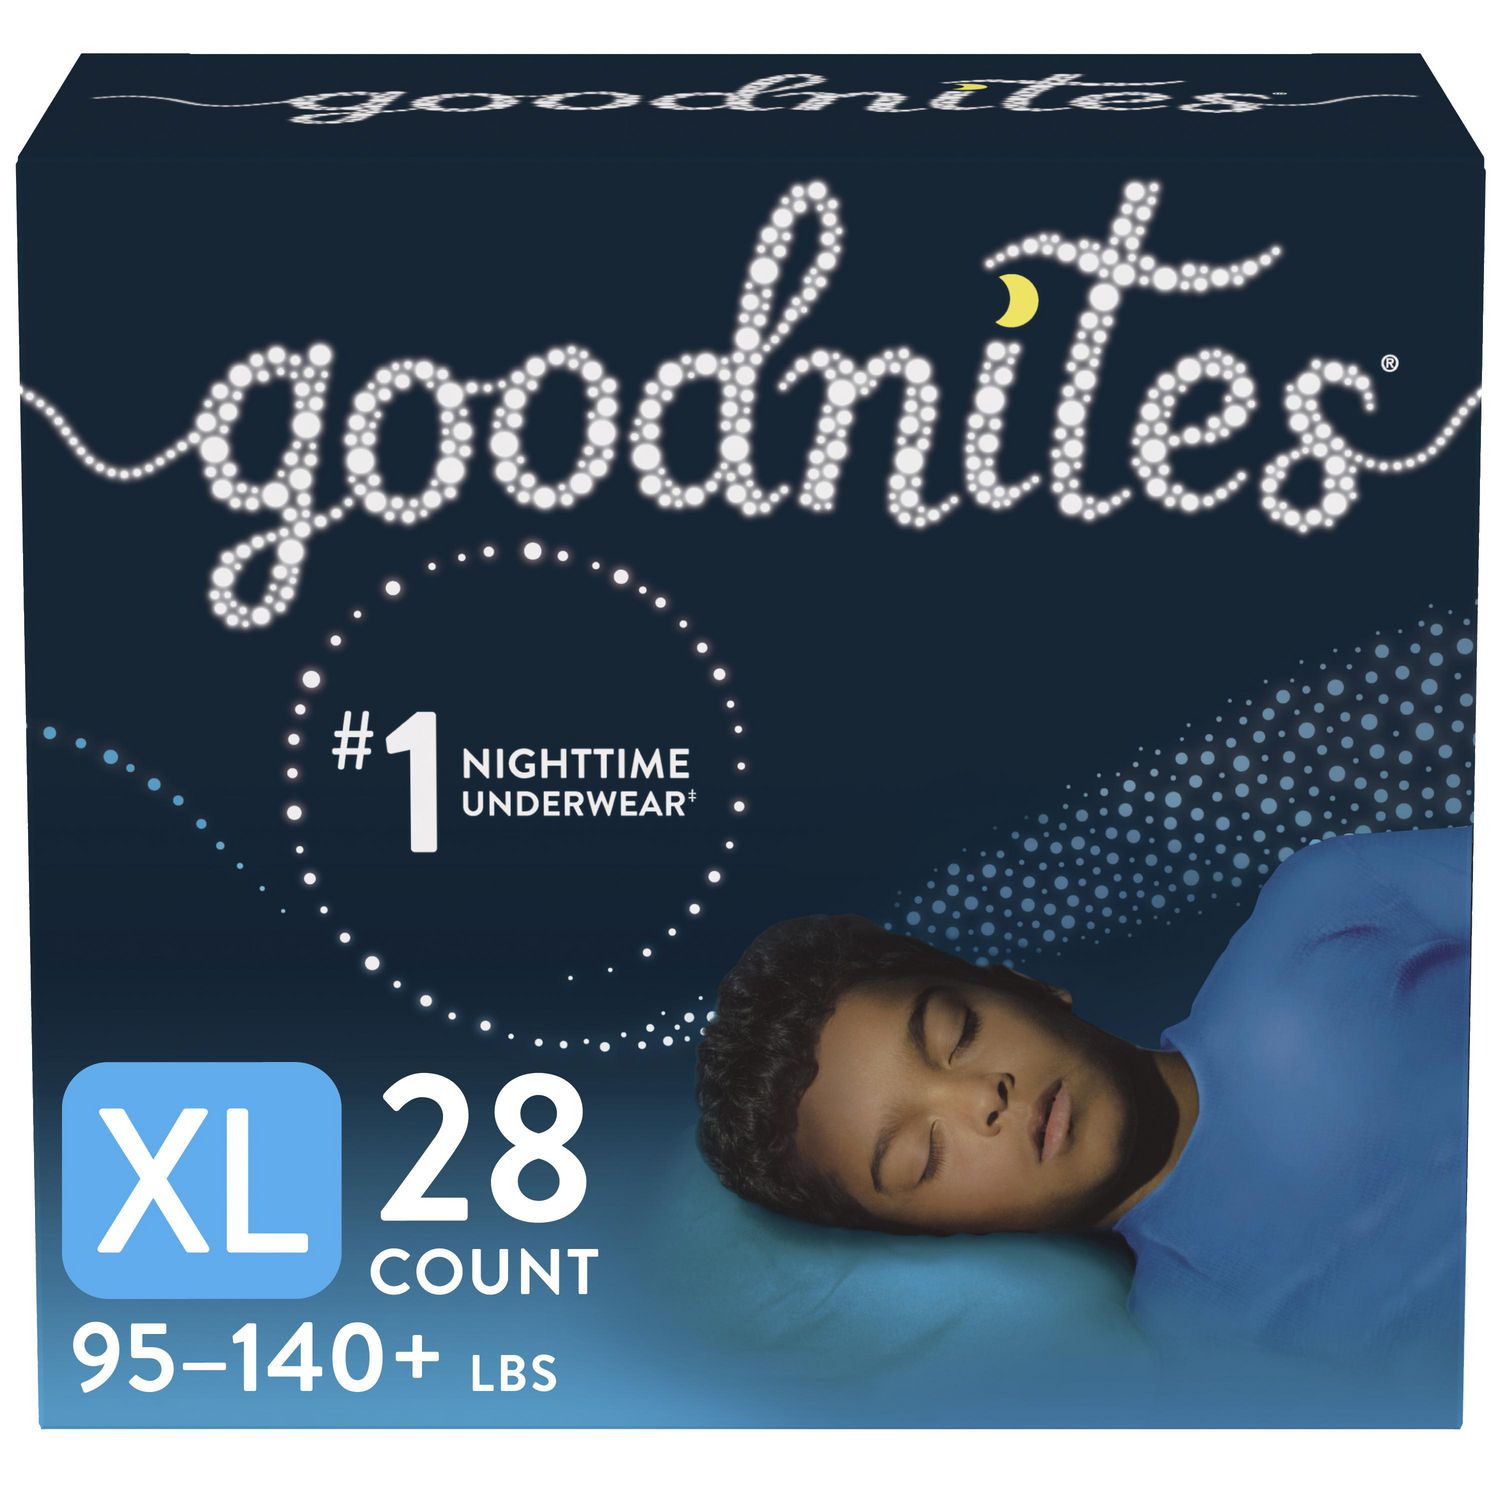 Goodnites Boys' Nighttime Bedwetting Underwear, Giga Pack, XS, S/M